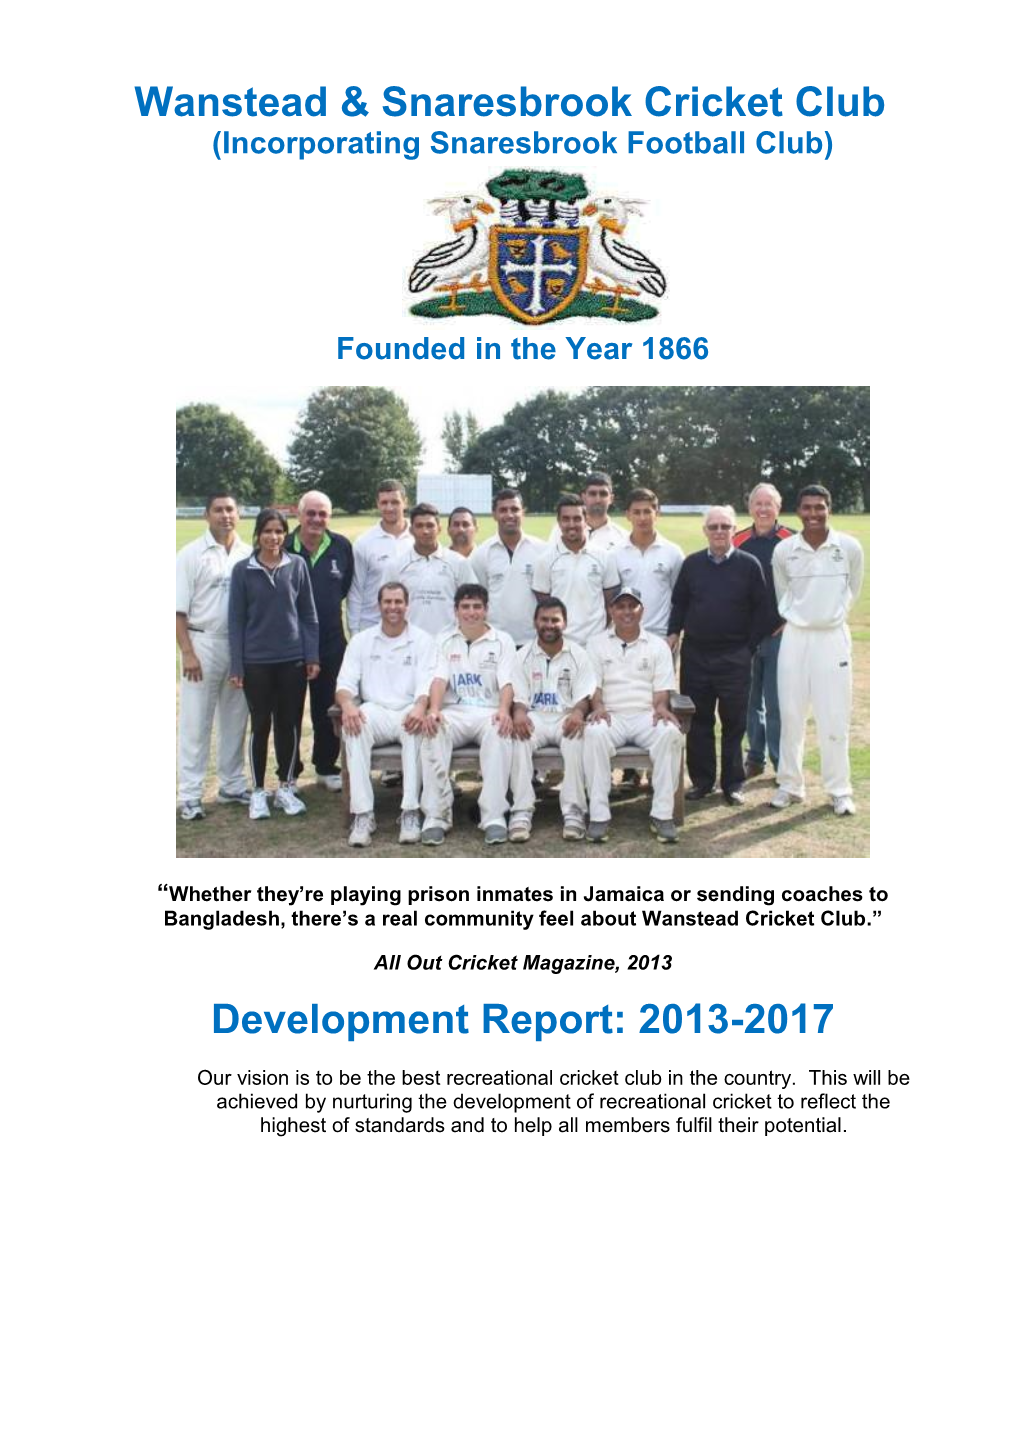 Wanstead & Snaresbrook Cricket Club Development Report: 2013-2017